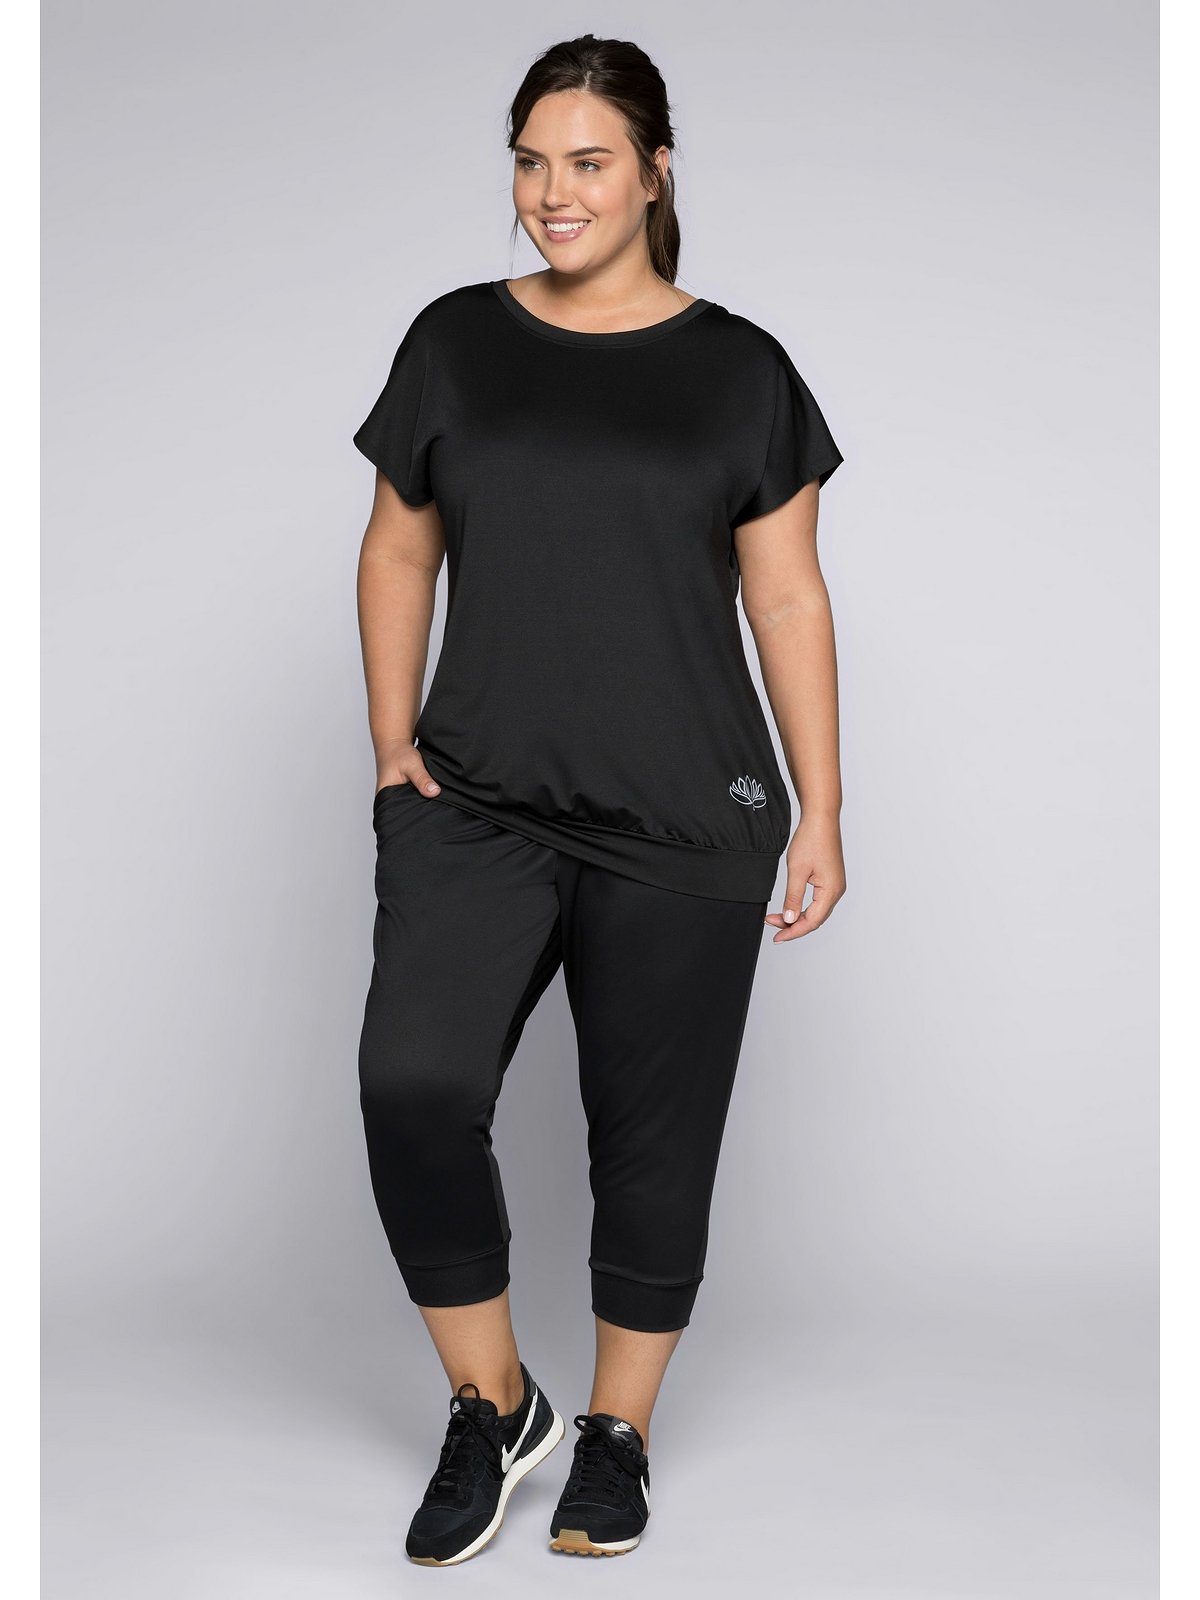 Sheego T-Shirt Größen Große aus Funktionsmaterial schwarz